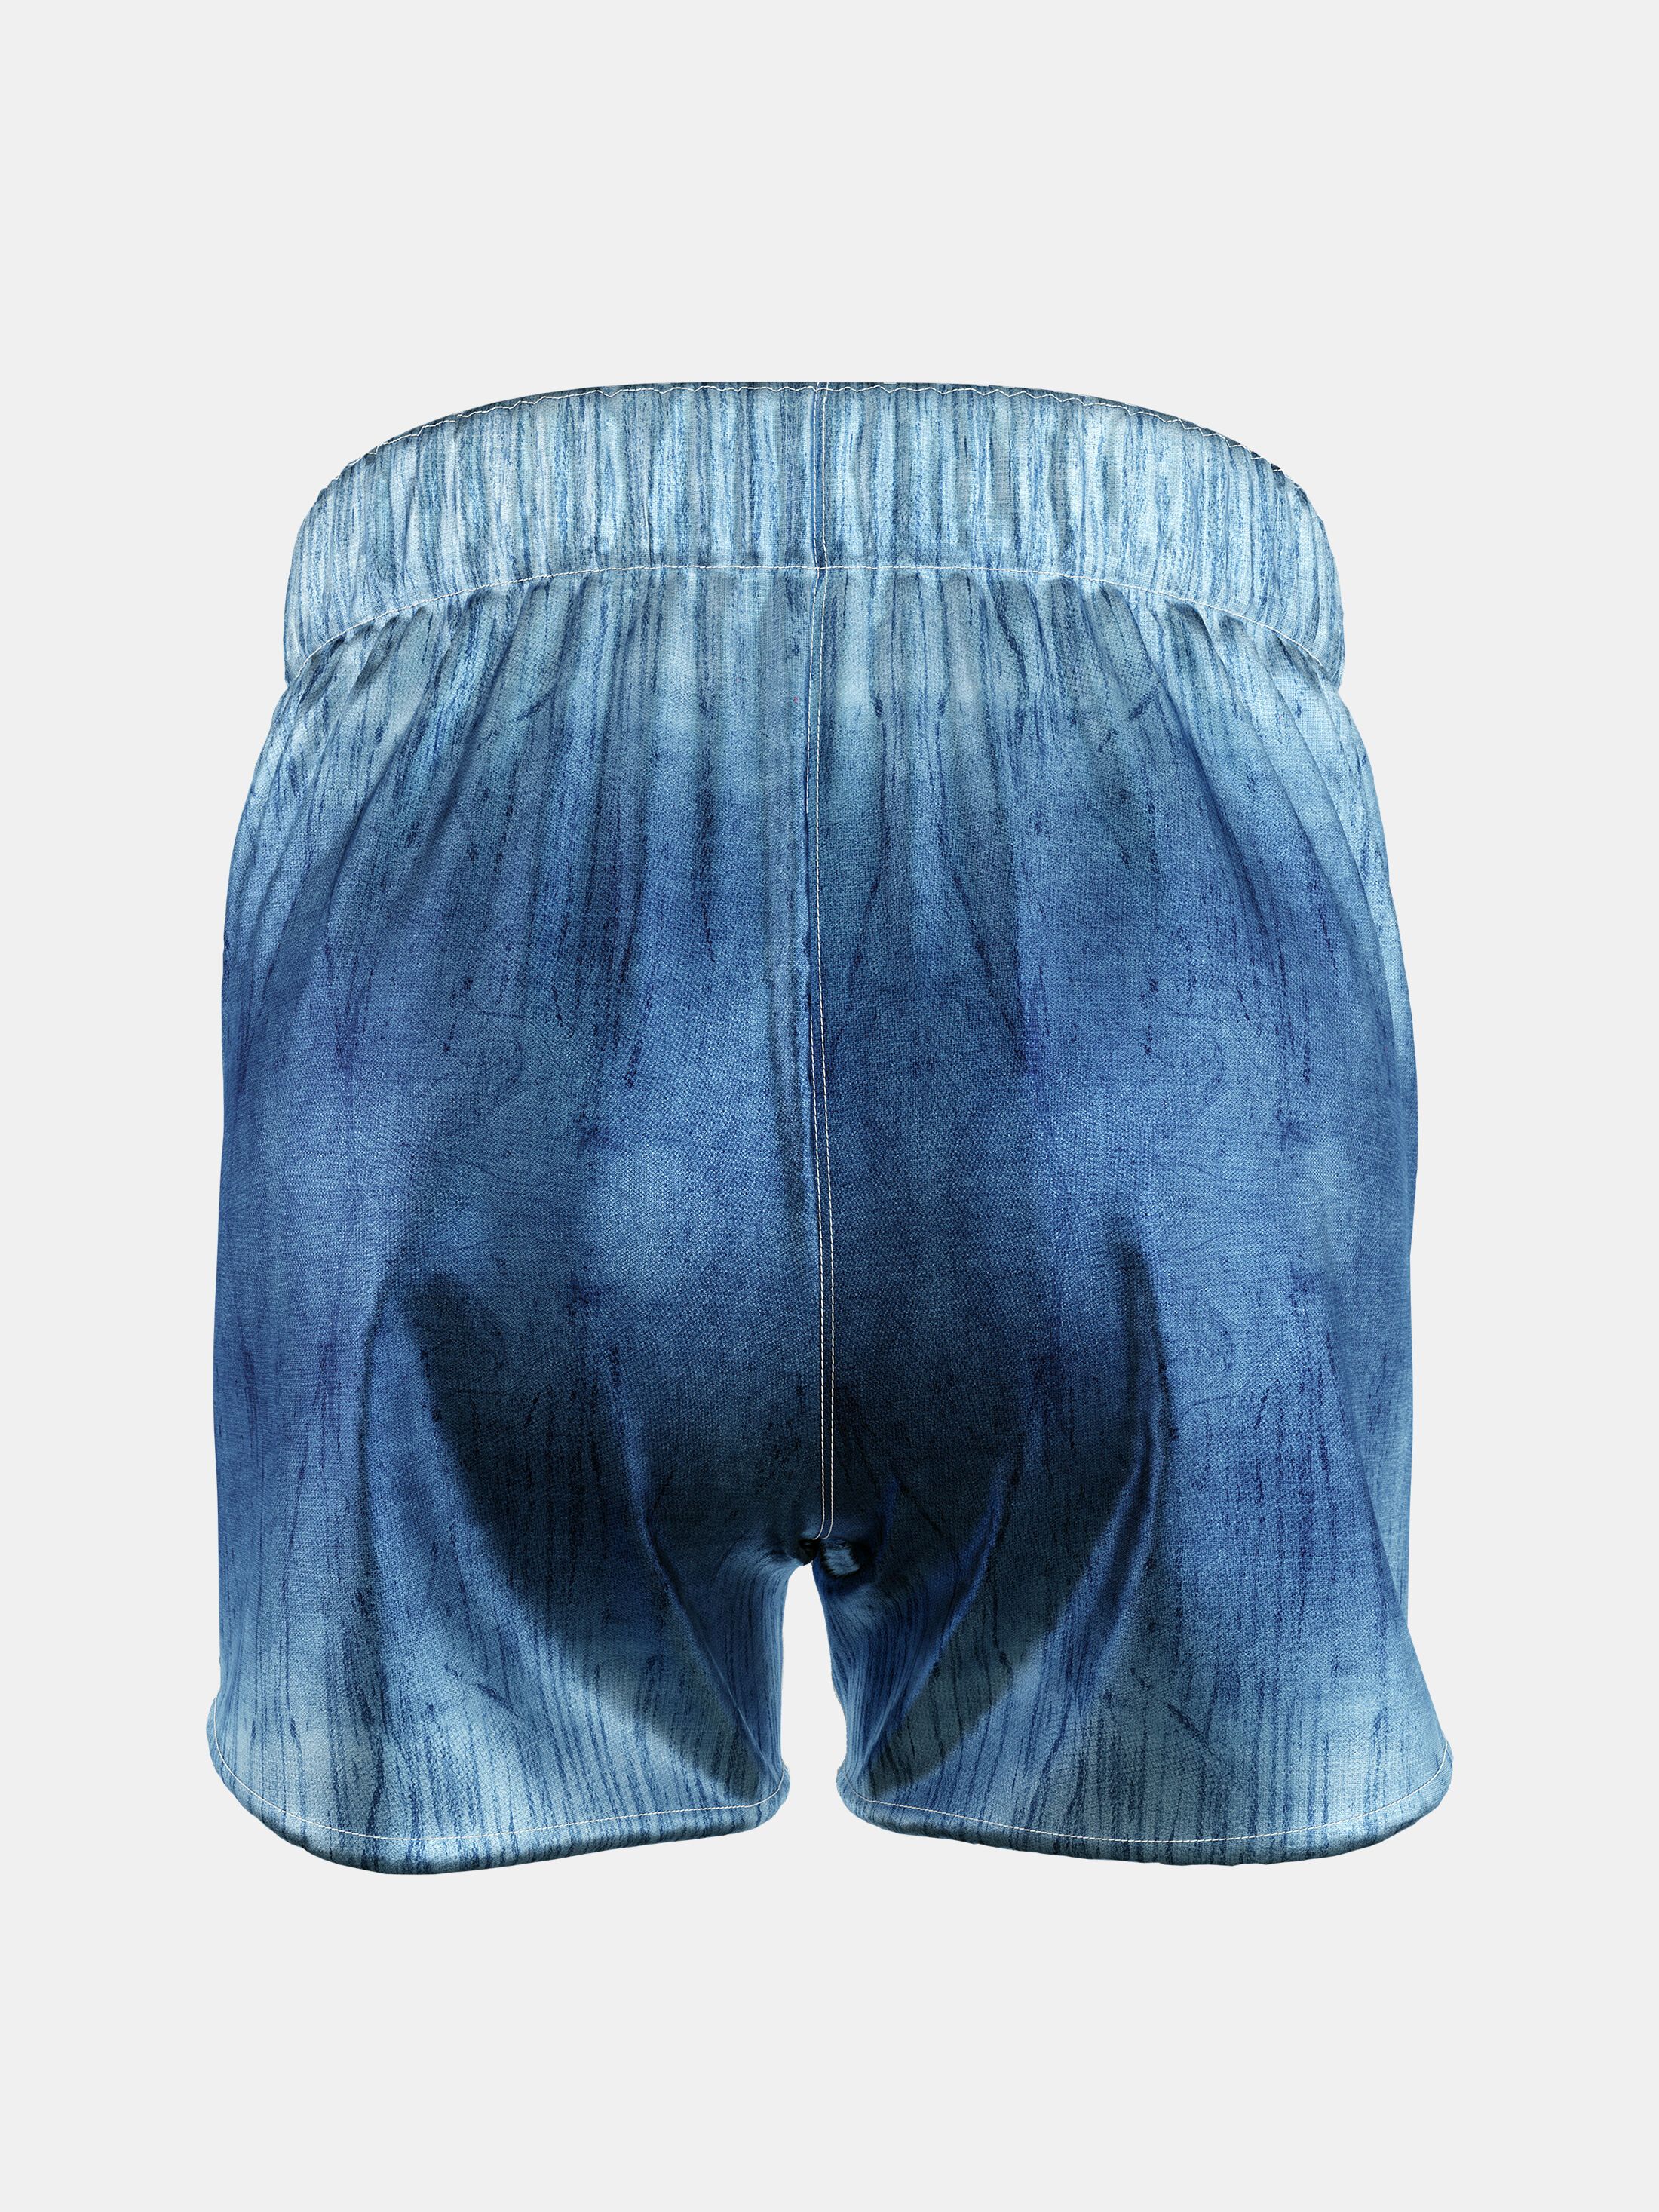 Design your own print custom men's boxer shorts nz